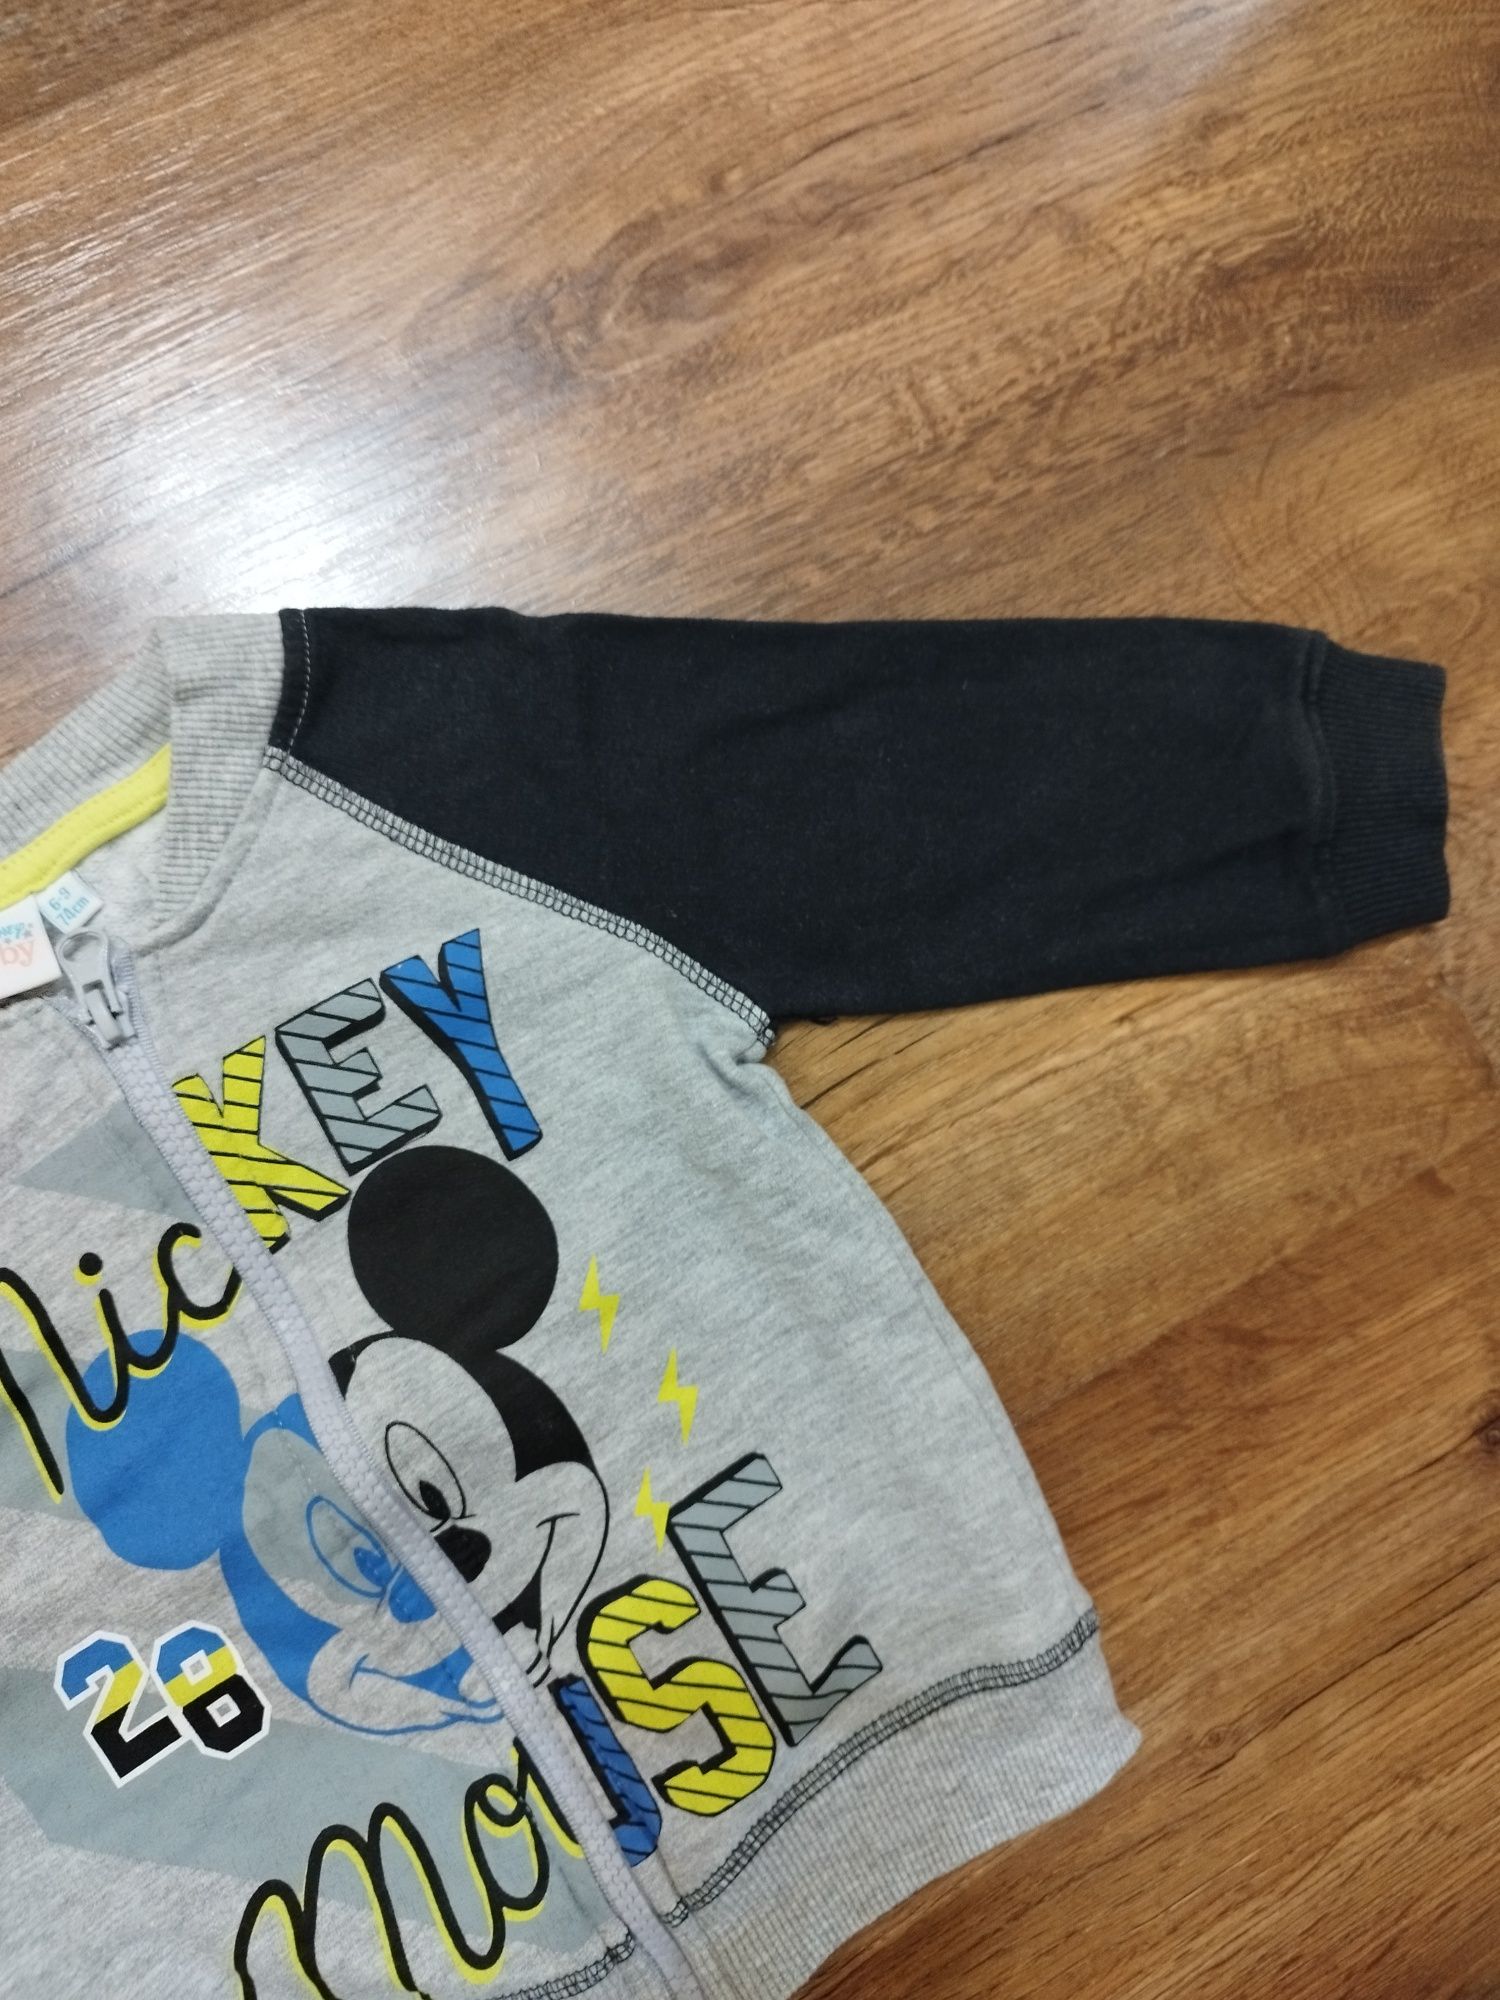 Bluza bez kaptura Mickey Mouse dla chłopca R.68/74